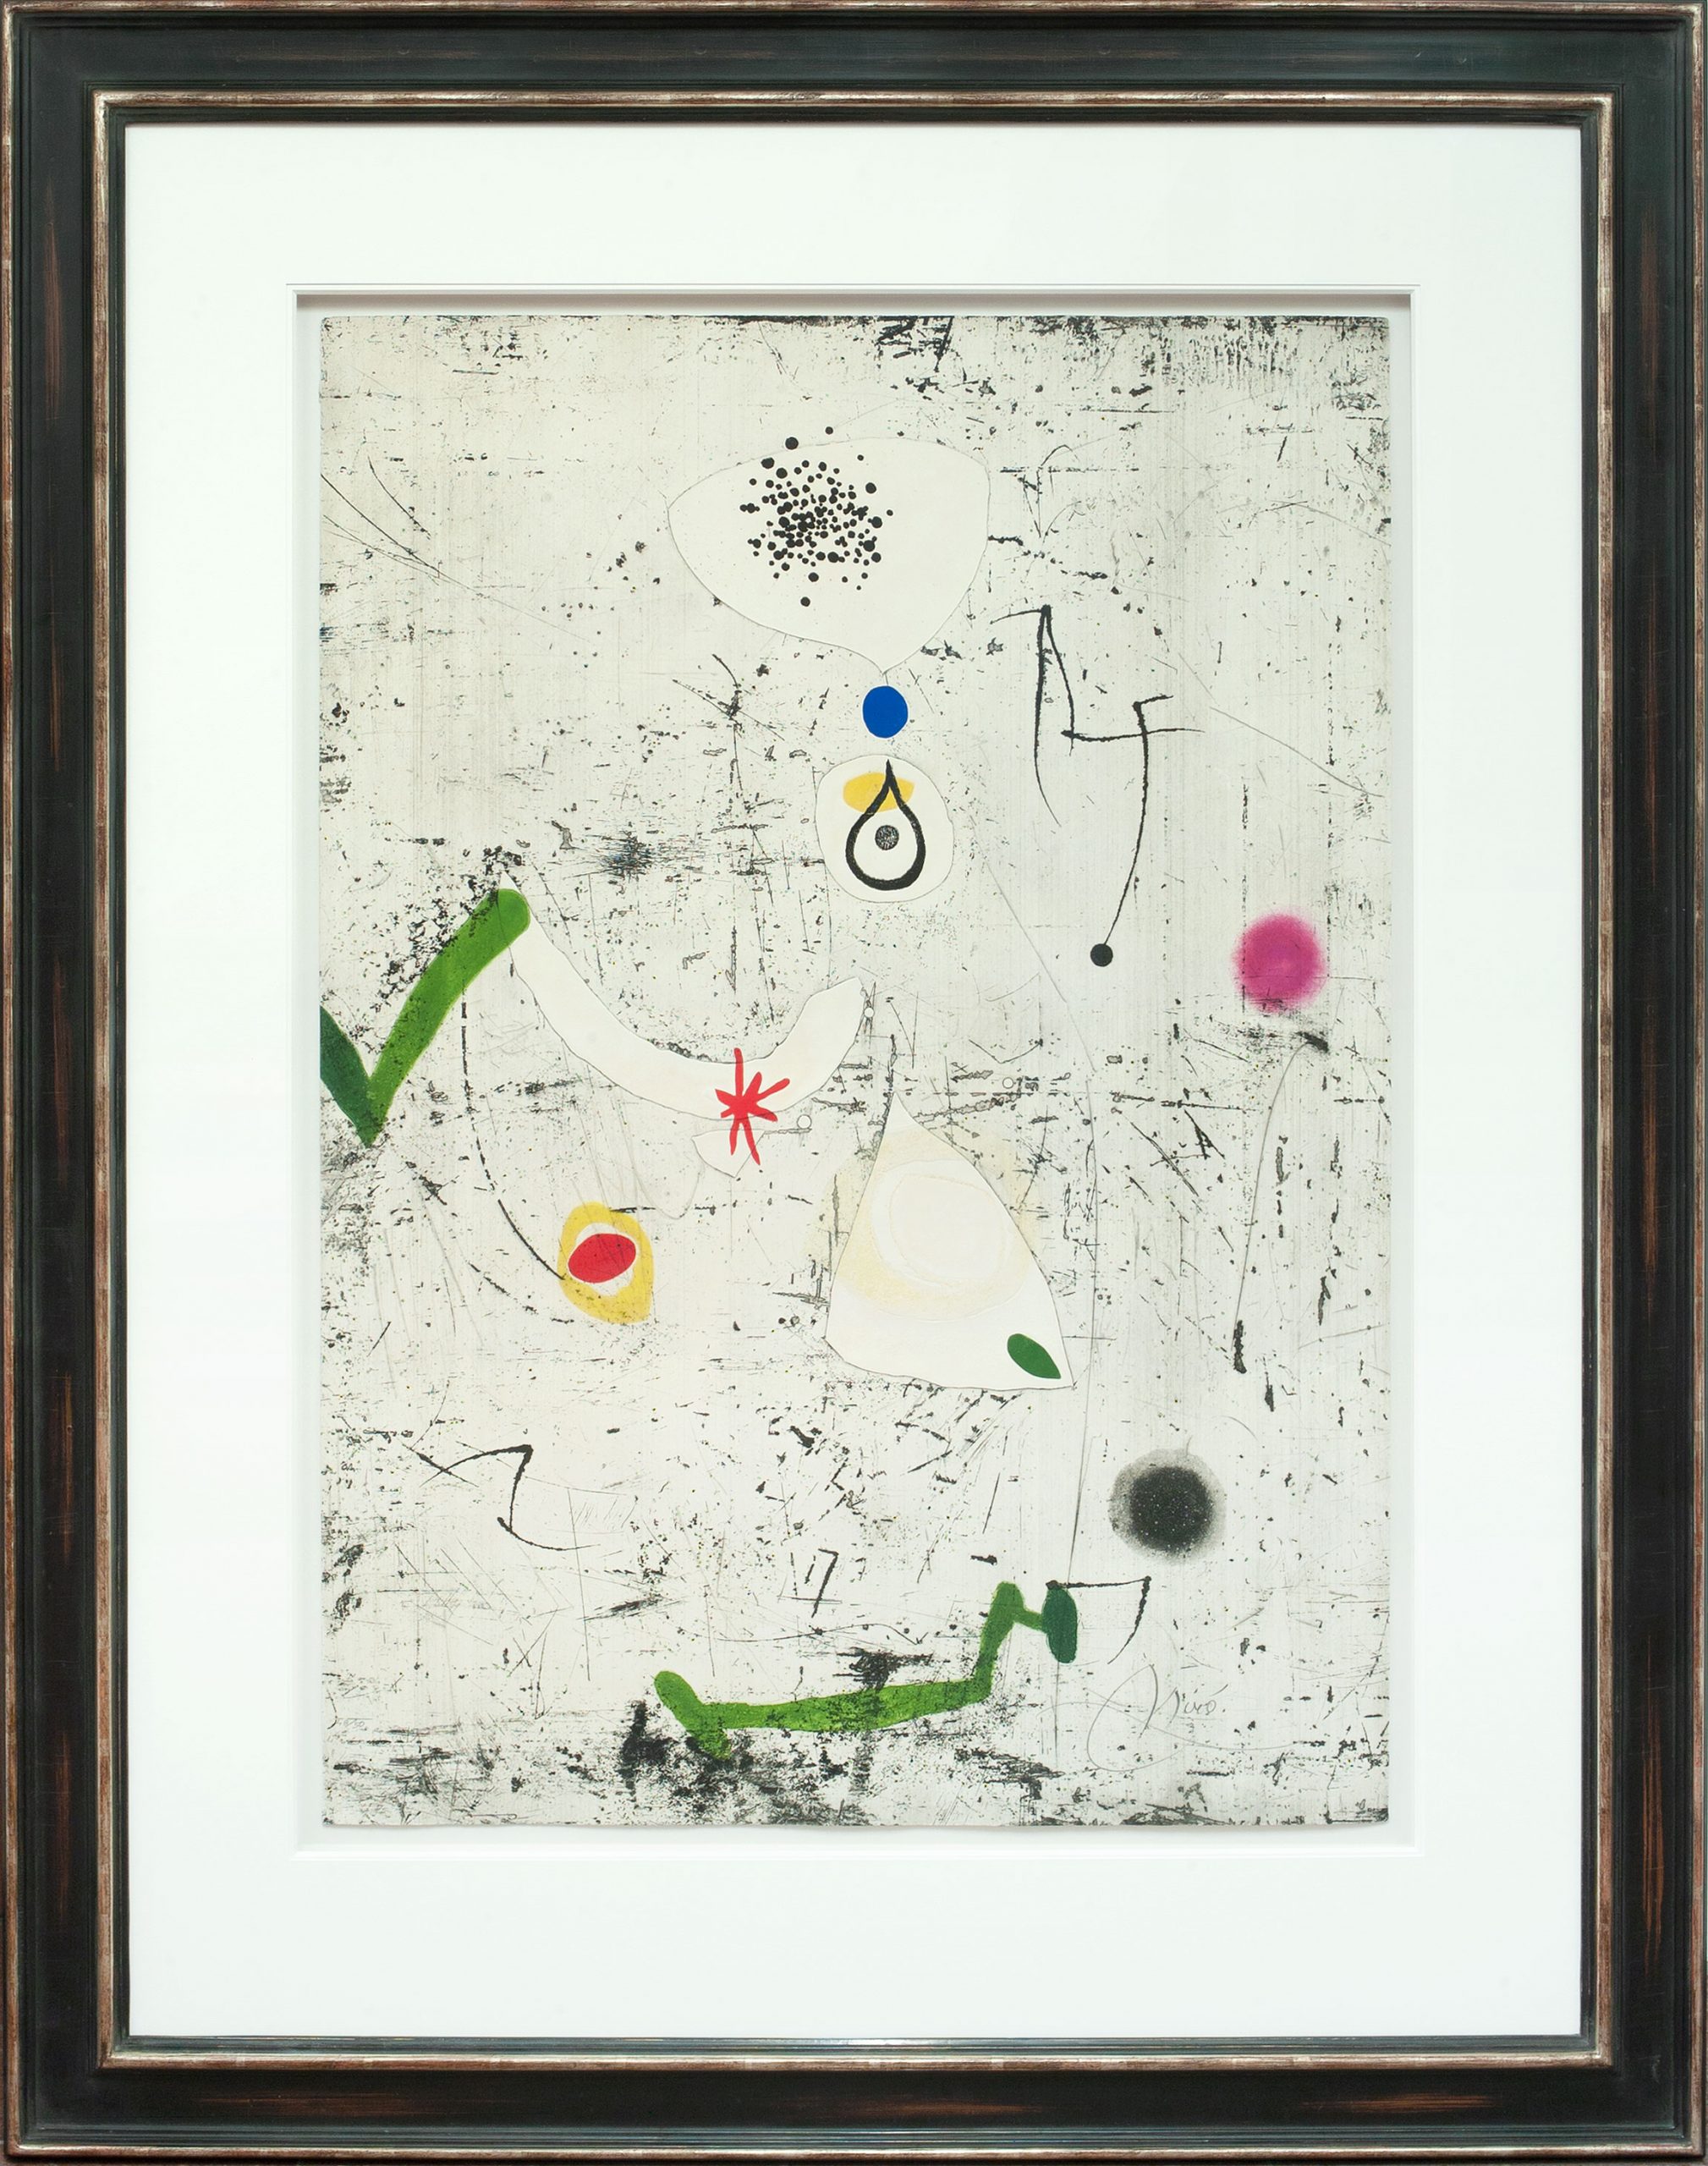 Joan Miró, Proverbi, Galerie Française